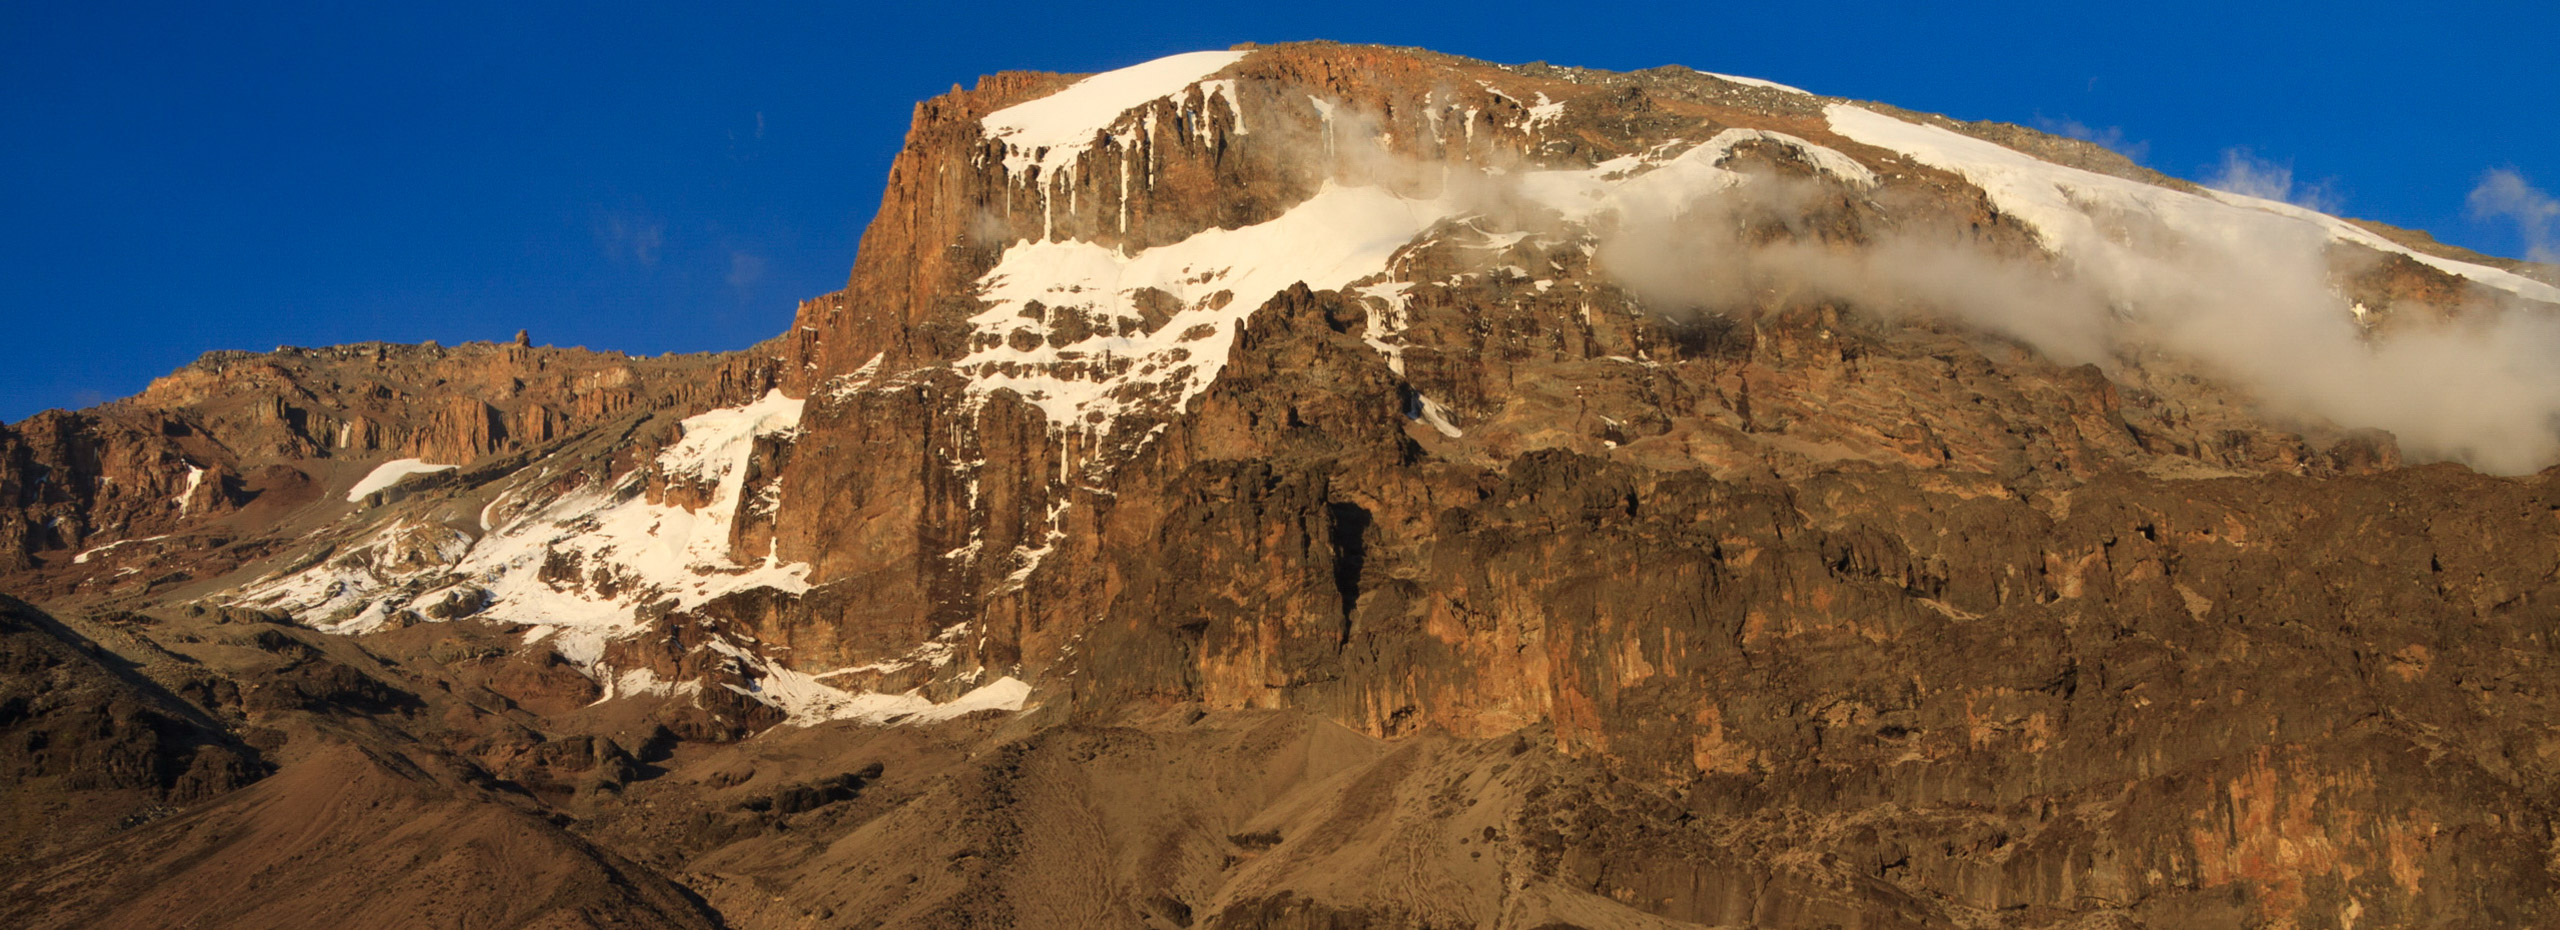 Kilimanjaro 2014